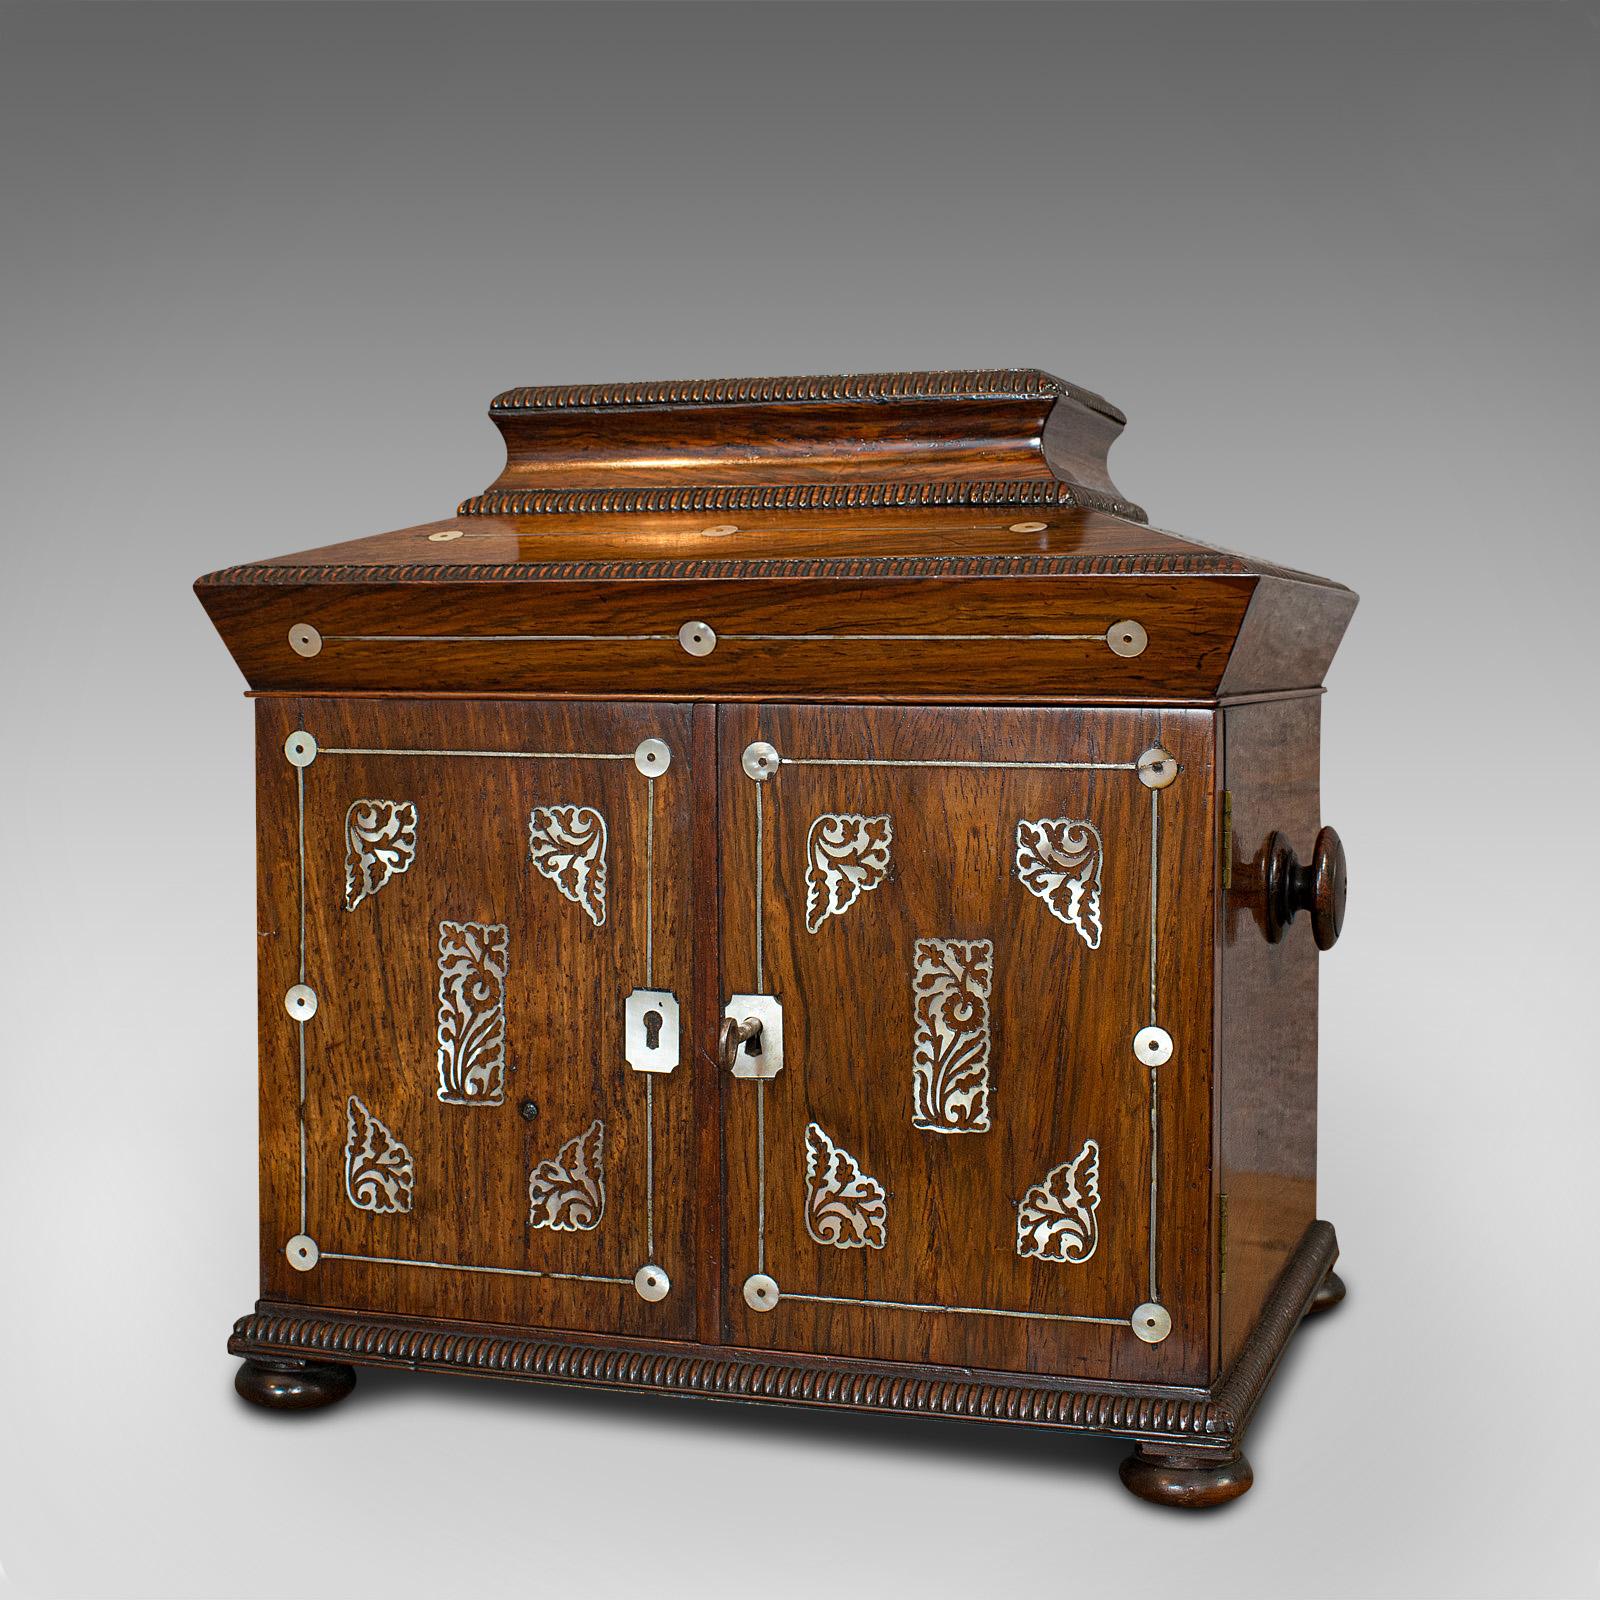 British Antique Gentleman's Correspondence Box, Campaign, Travel Case, Regency